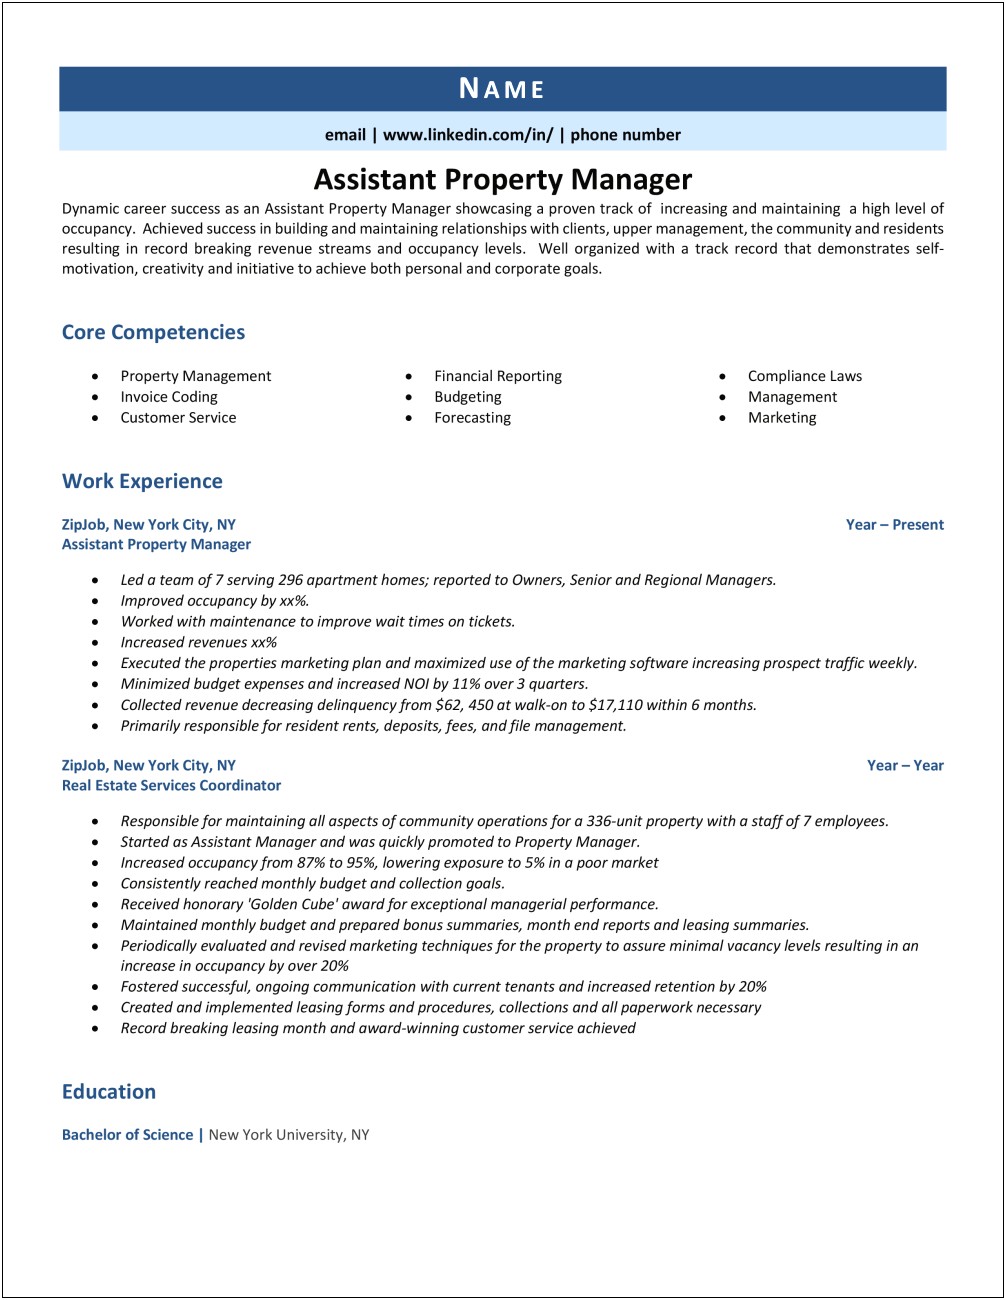 Assistant Property Manager Job Description For Resume